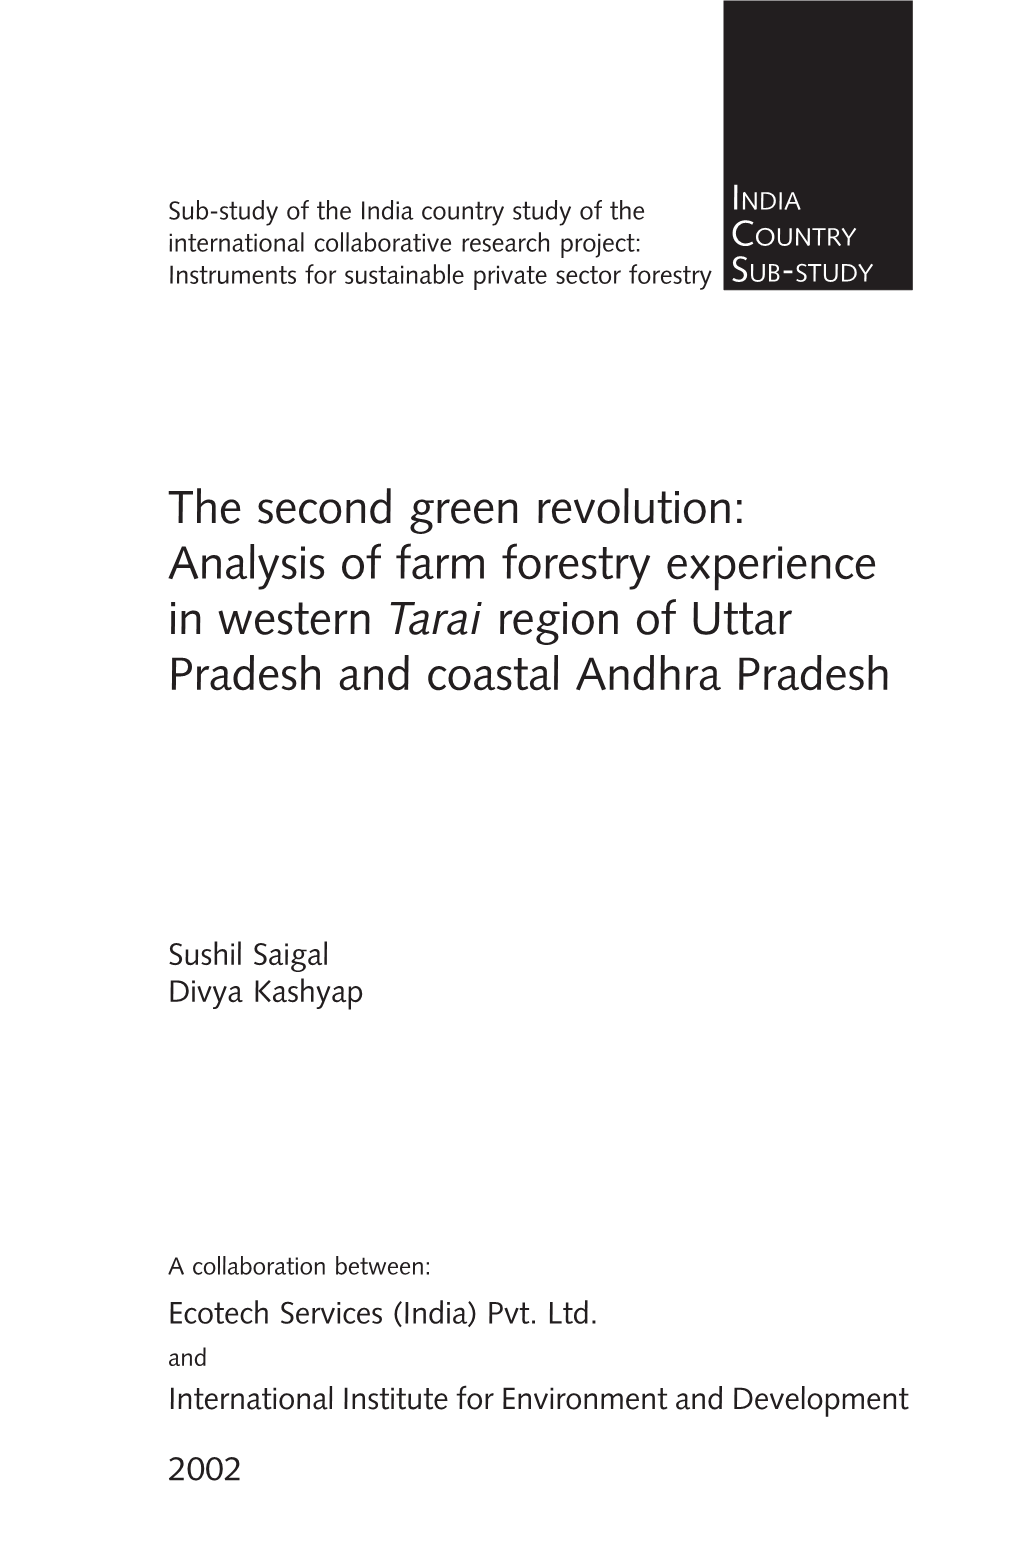 The Second Green Revolution: Analysis of Farm Forestry Experience in Western Tarai Region of Uttar Pradesh and Coastal Andhra Pradesh